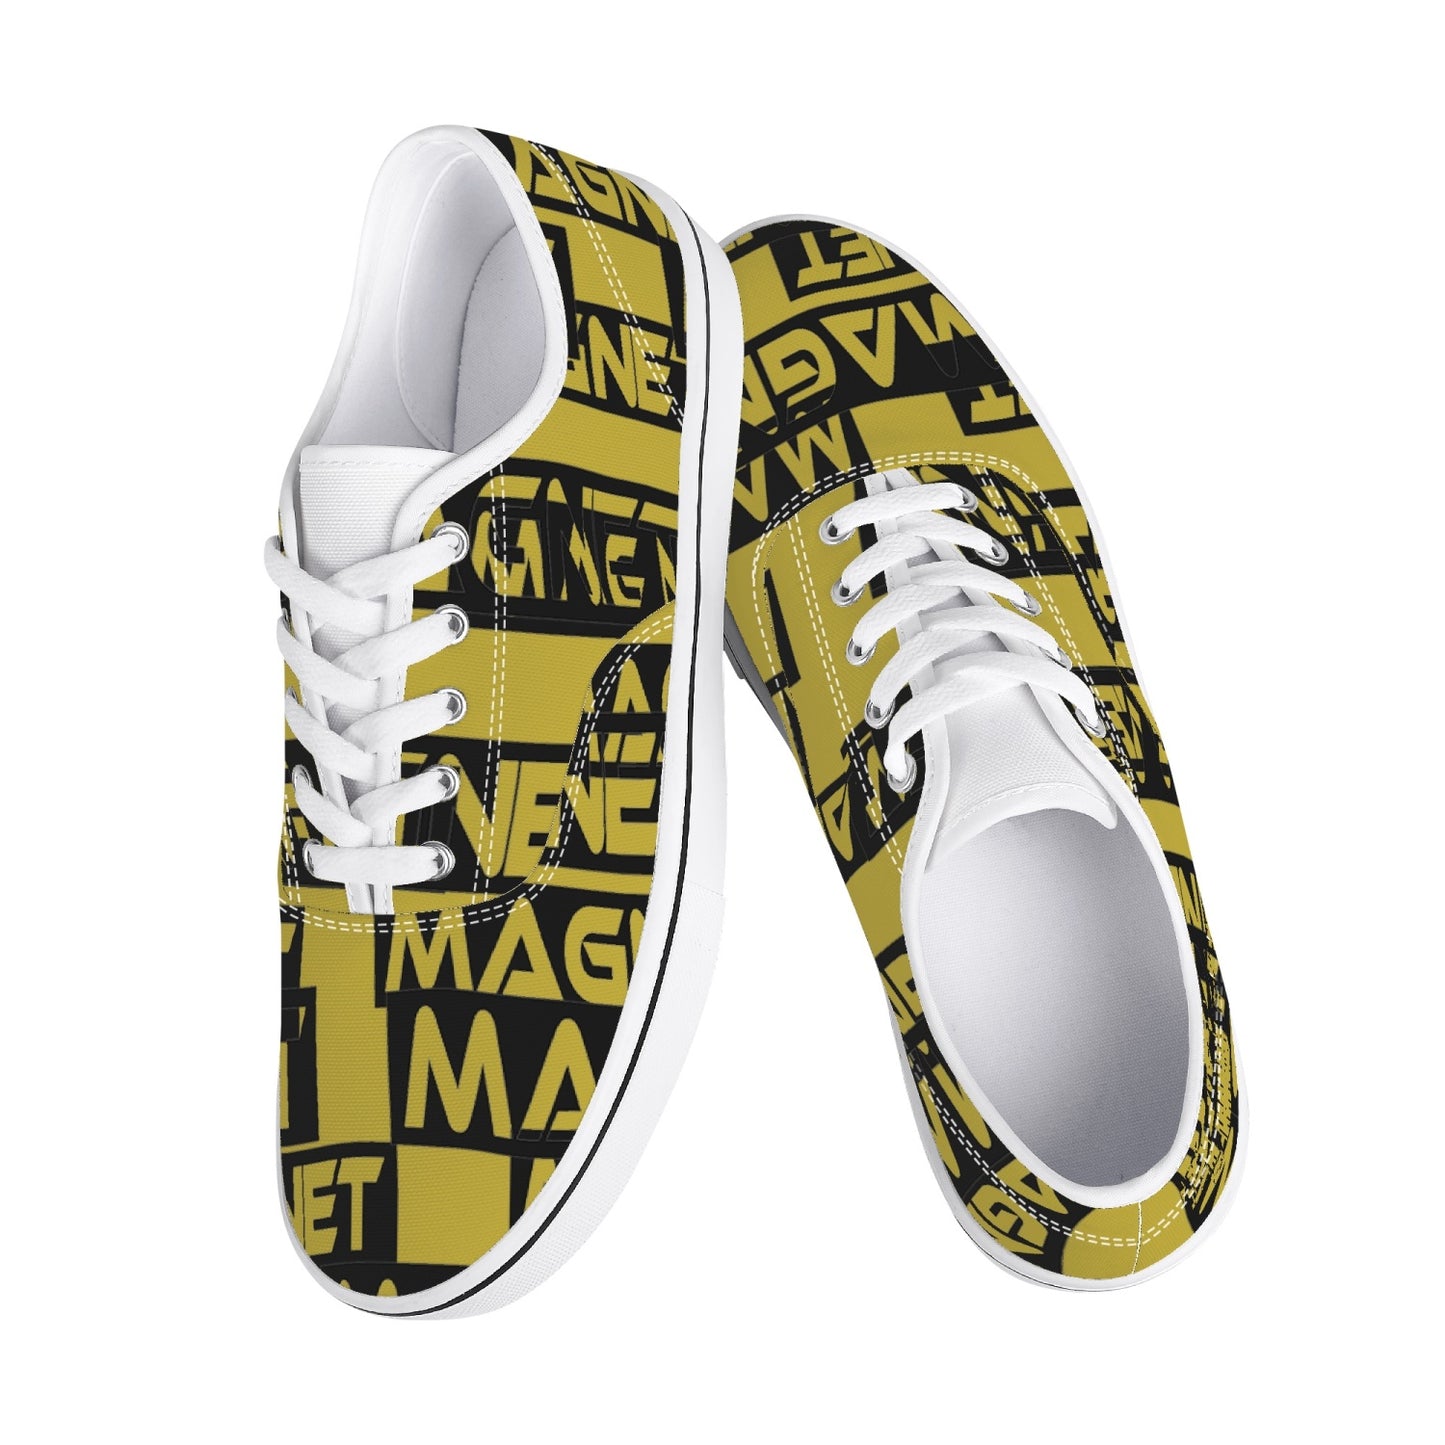 Magnet drip Skate Shoes - White/Black